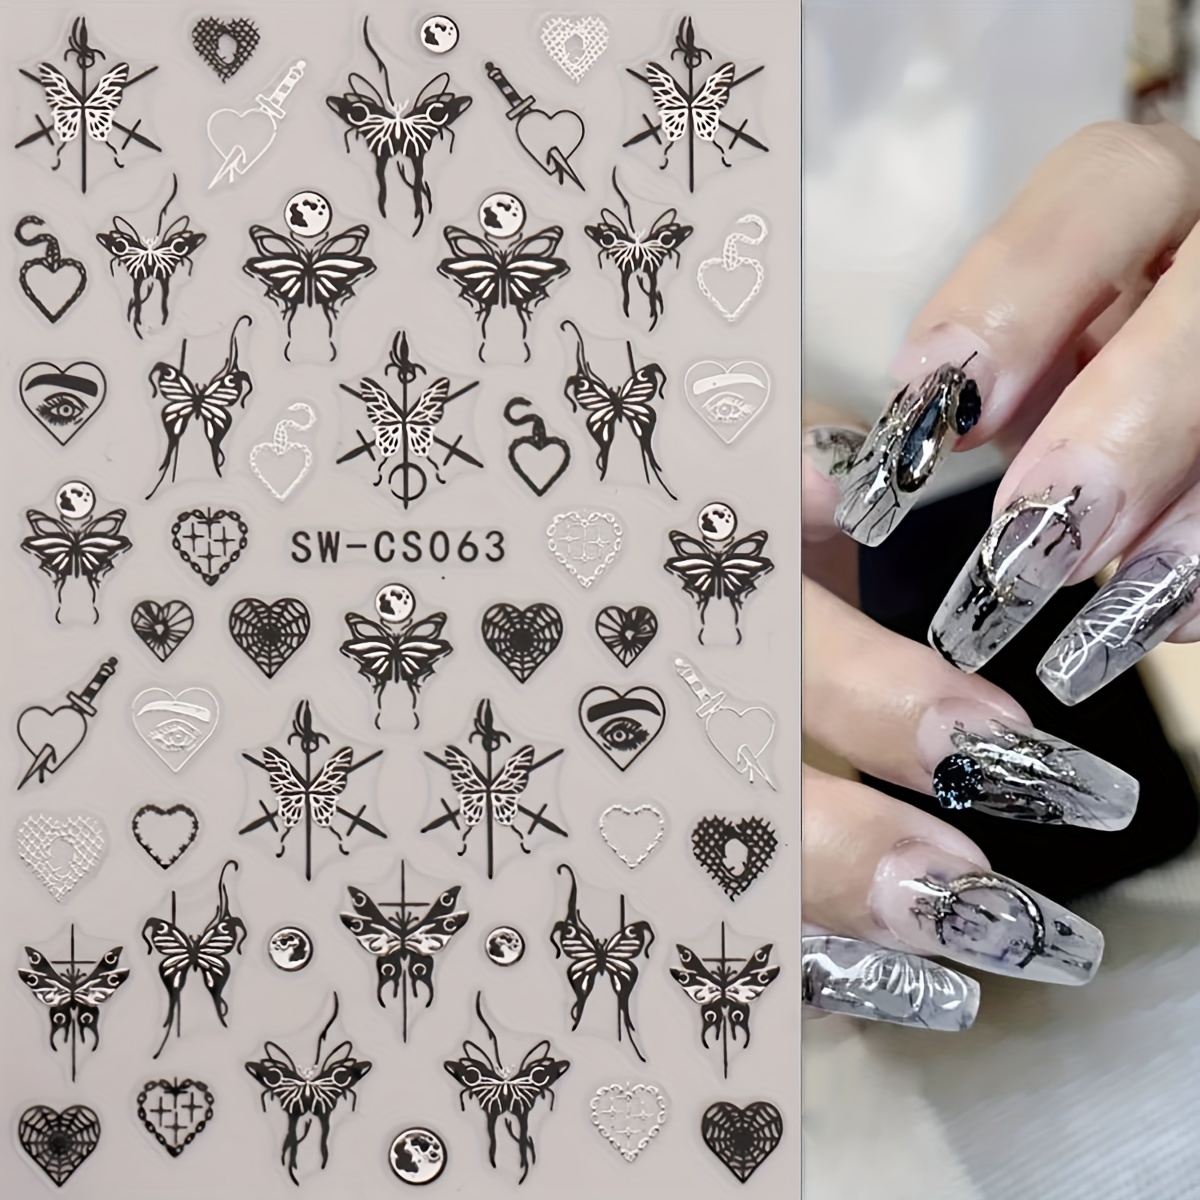 3 Sheets 5D Butterfly Nail Stickers for Nail Arts, 3D Nail Decals  Self-Adhesive Nail Art Supplies for Nail Designer, Nail Tattoos for Women  Girls